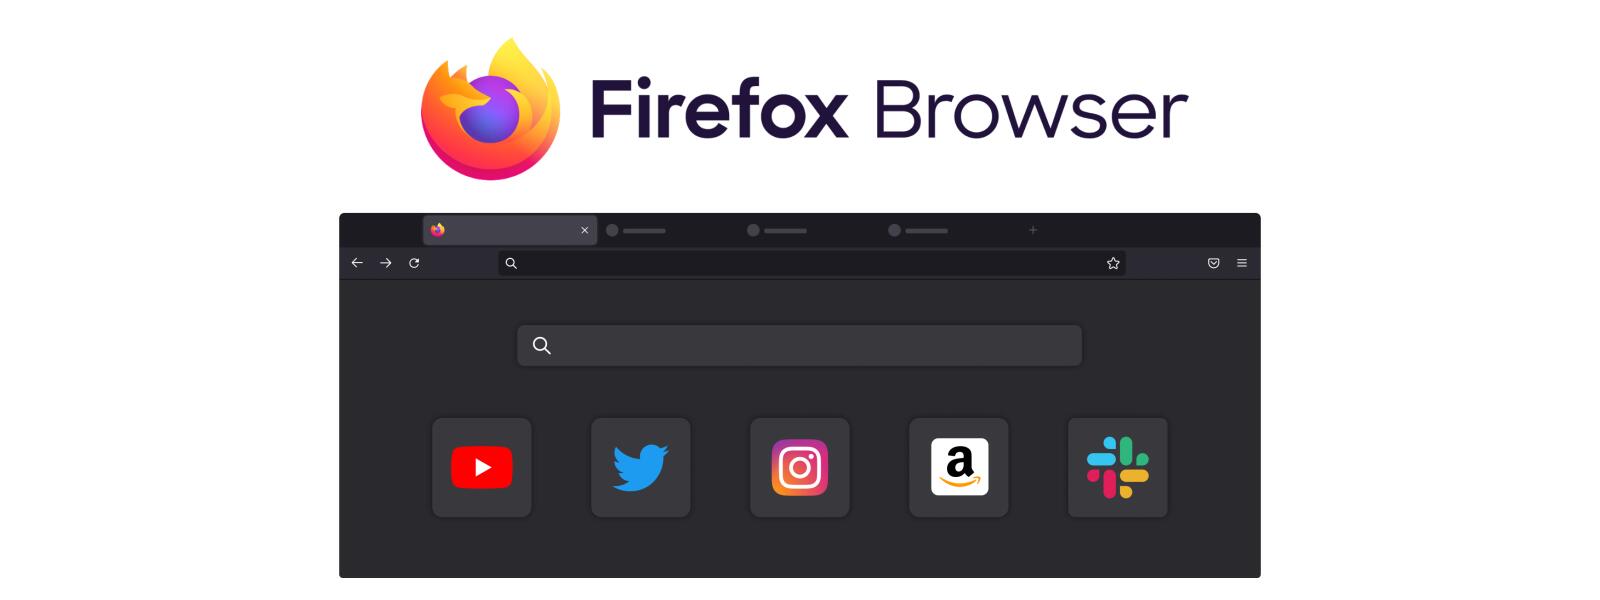 Firefox 101, melloras para videoconferencia